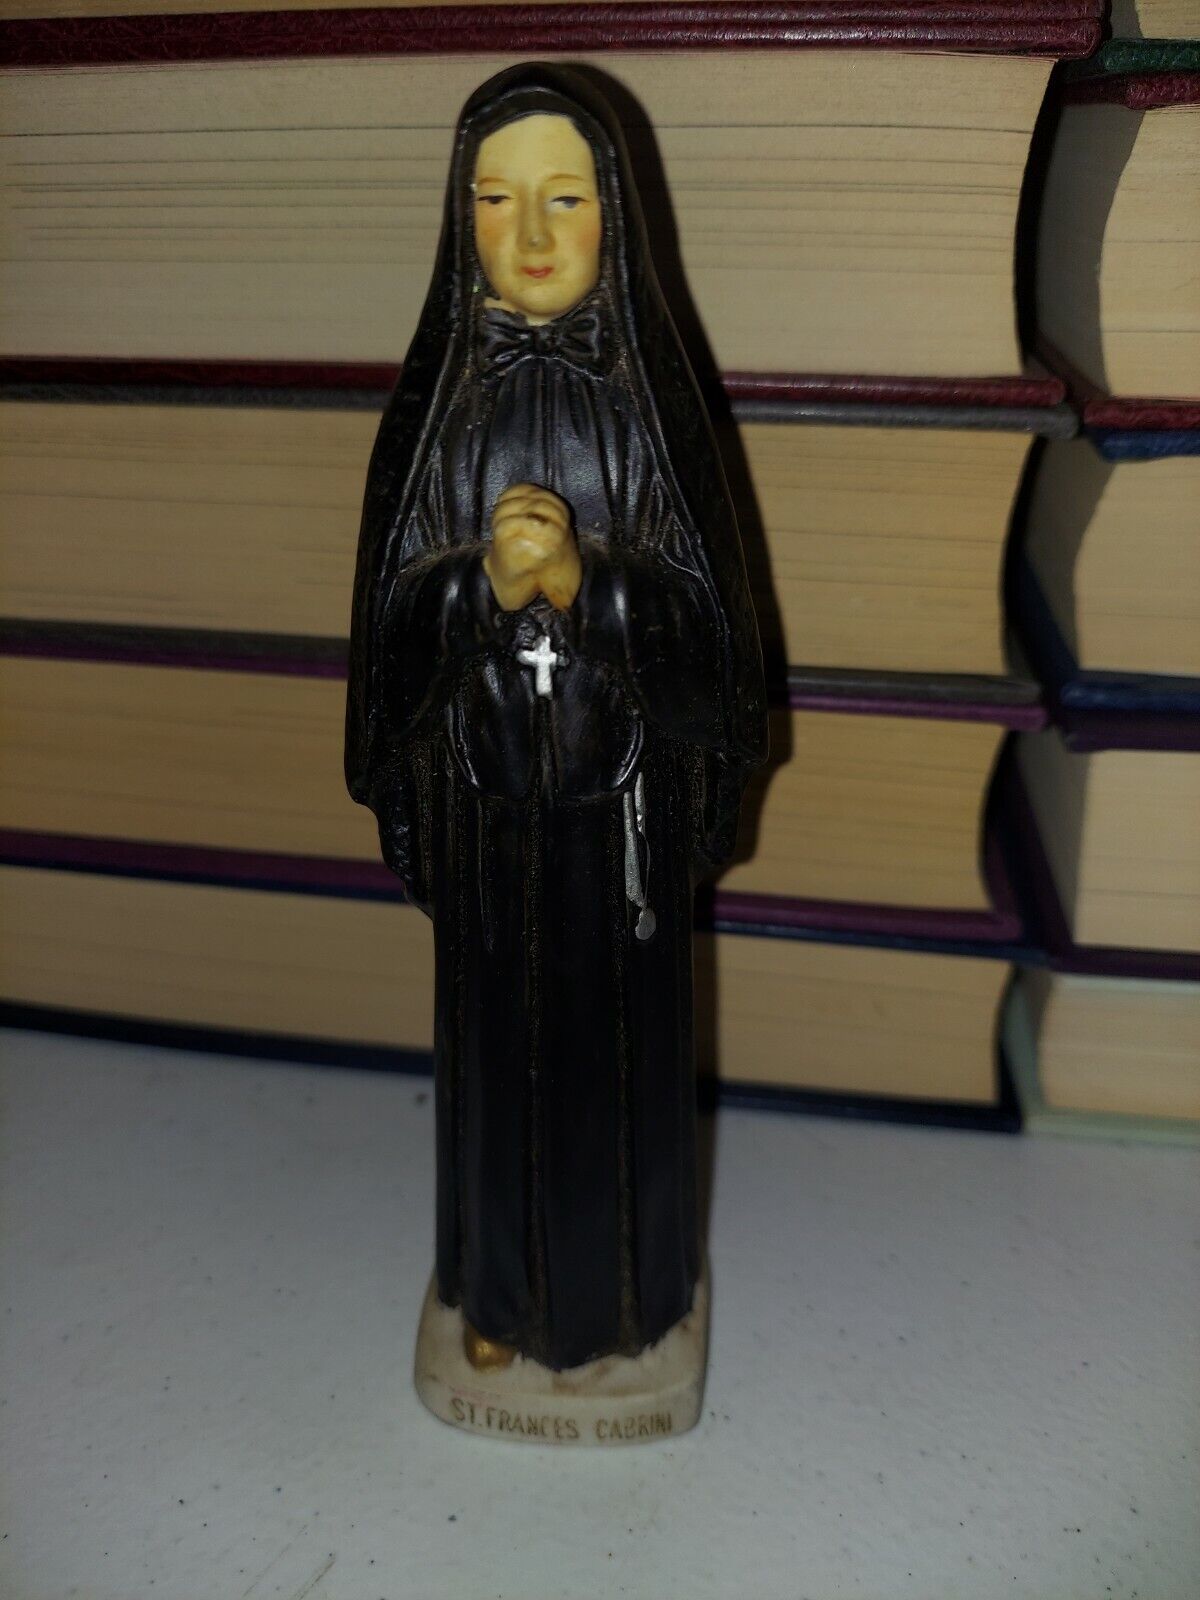 •St. Frances Cabrini Sanmyro Japan Porcelain Catholic Religious Figurine Vintage